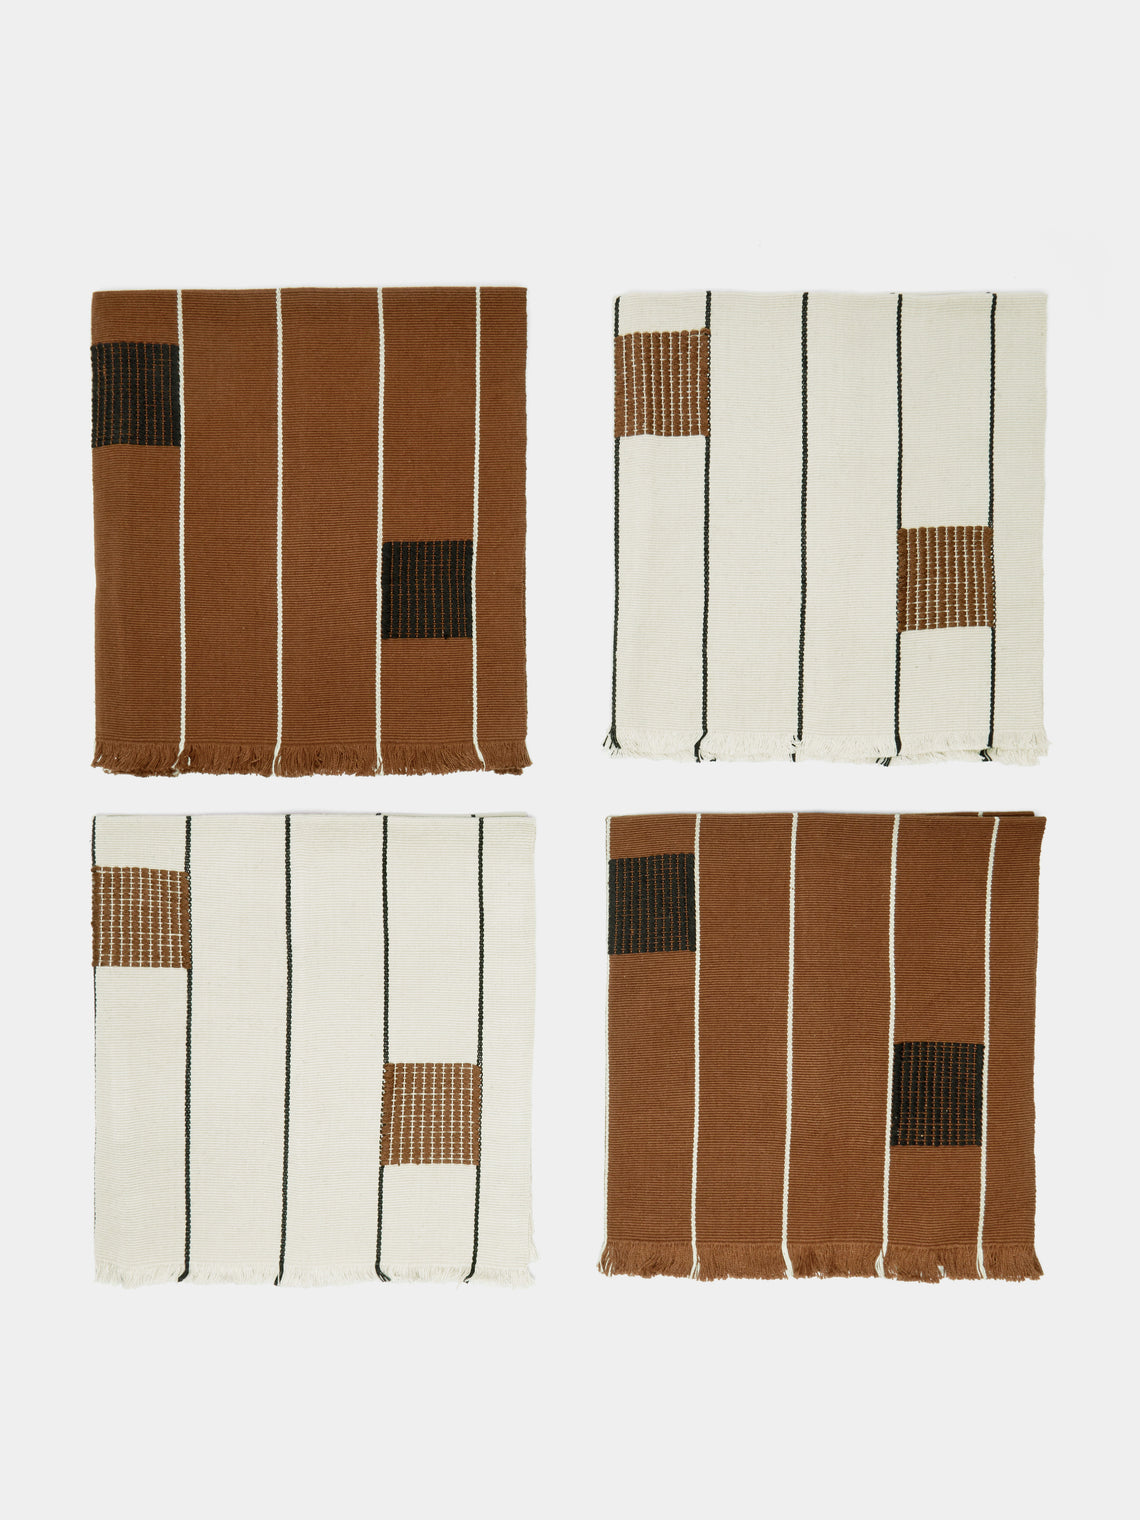 Revolution of Forms - Chiapas Handwoven Cotton Napkins (Set of 4) - Multiple - ABASK